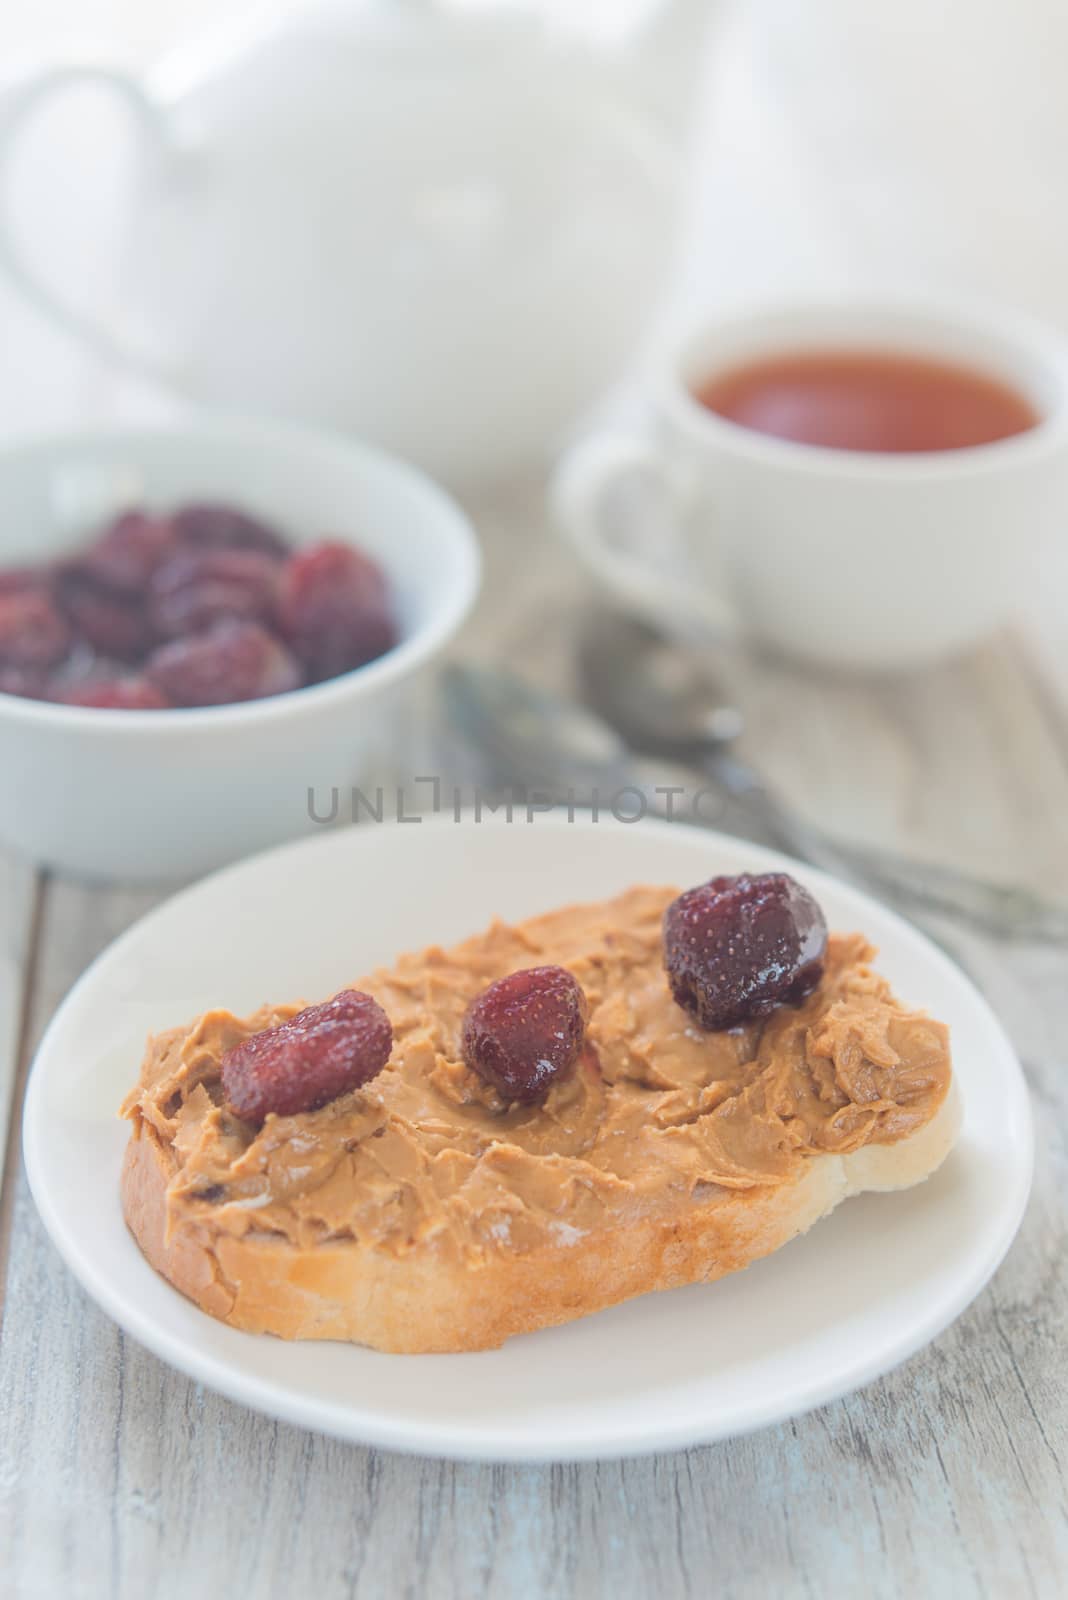 Breakfast with peanut butter sandwich by Linaga